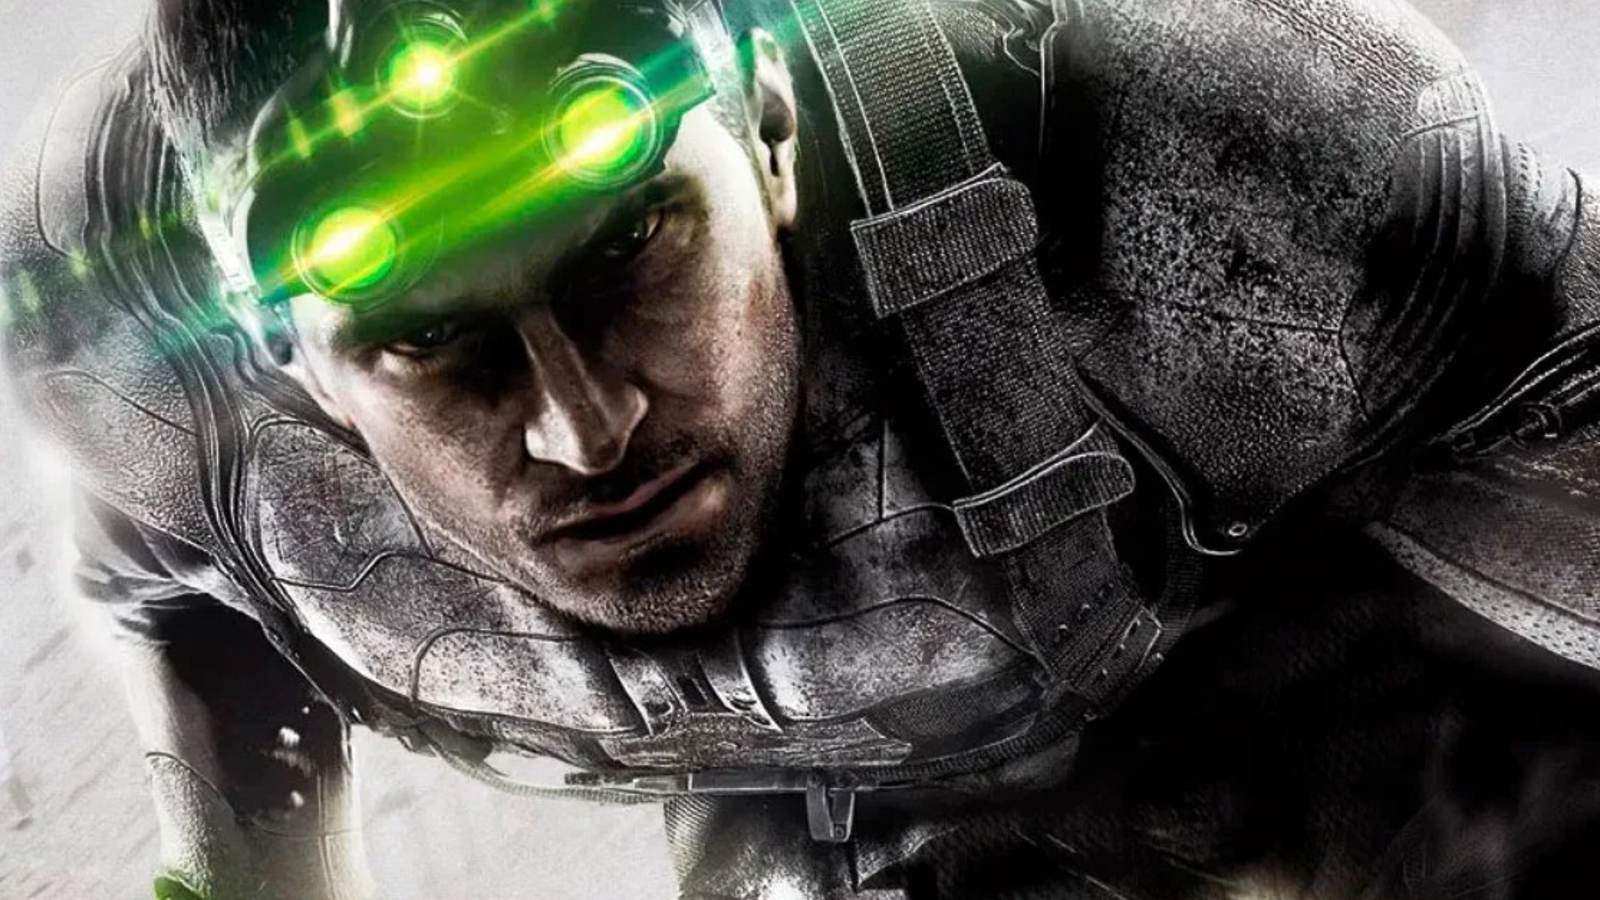 Ubisoft Shares Early Splinter Cell PS5 Remake Concept Art